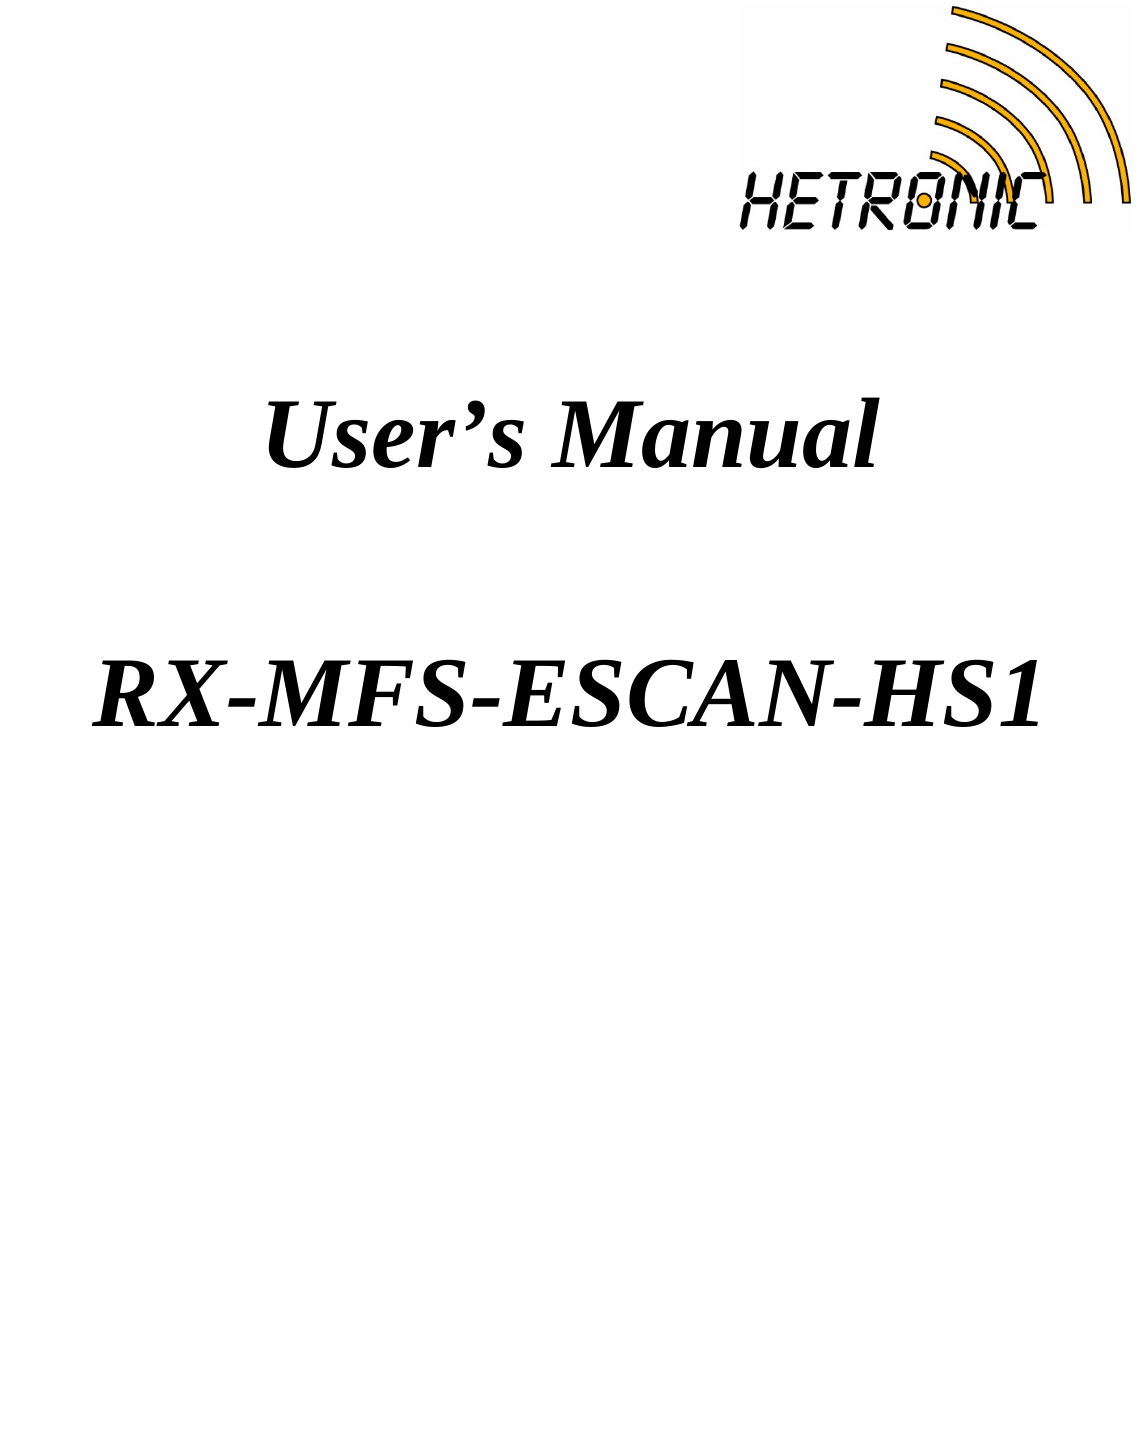   User’s Manual  RX-MFS-ESCAN-HS1